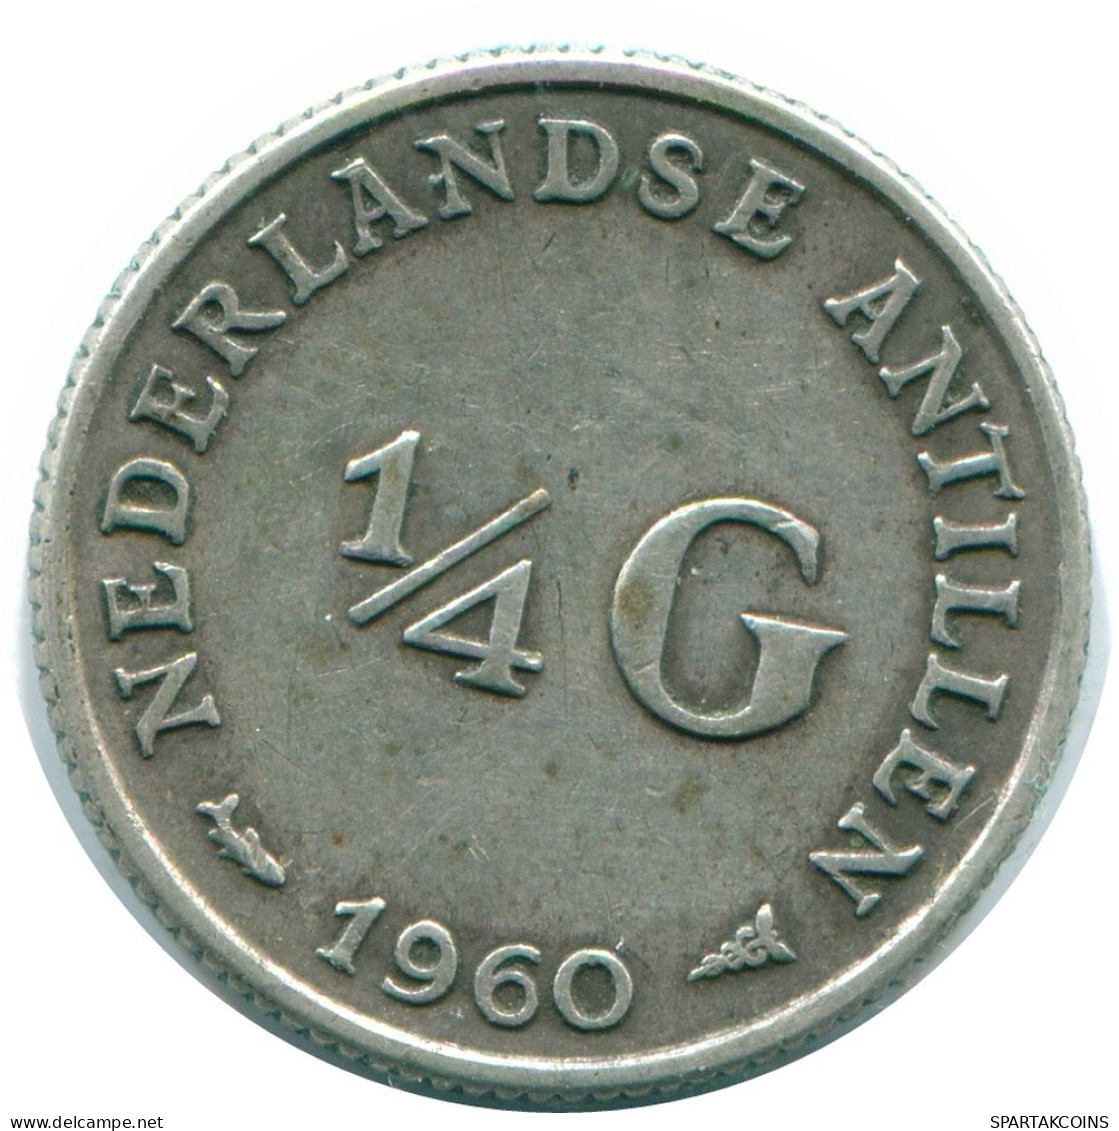 1/4 GULDEN 1960 NETHERLANDS ANTILLES SILVER Colonial Coin #NL11095.4.U.A - Netherlands Antilles